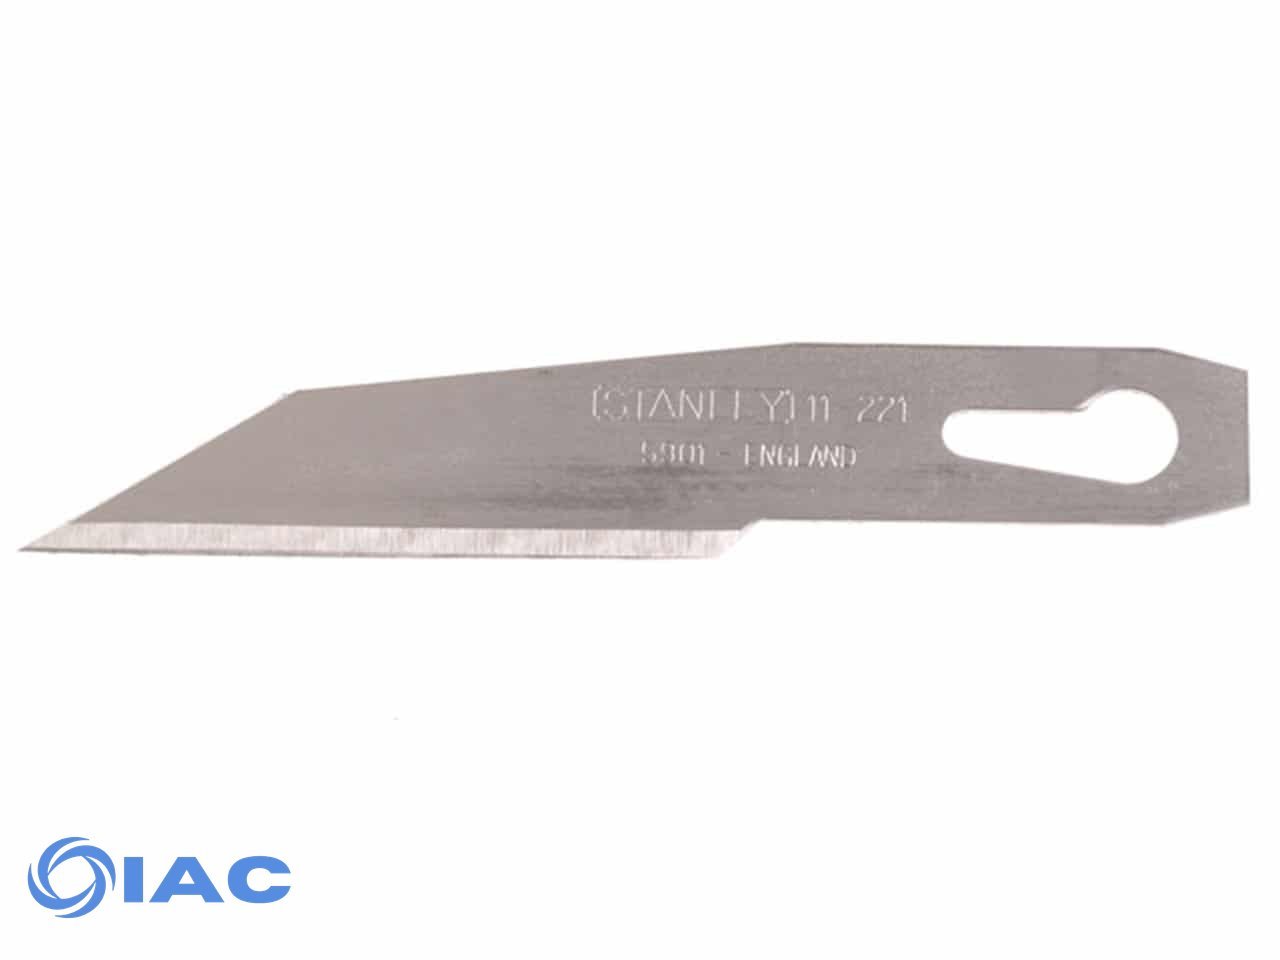 Stanley 5901B Straight Slimknife Blades (3)